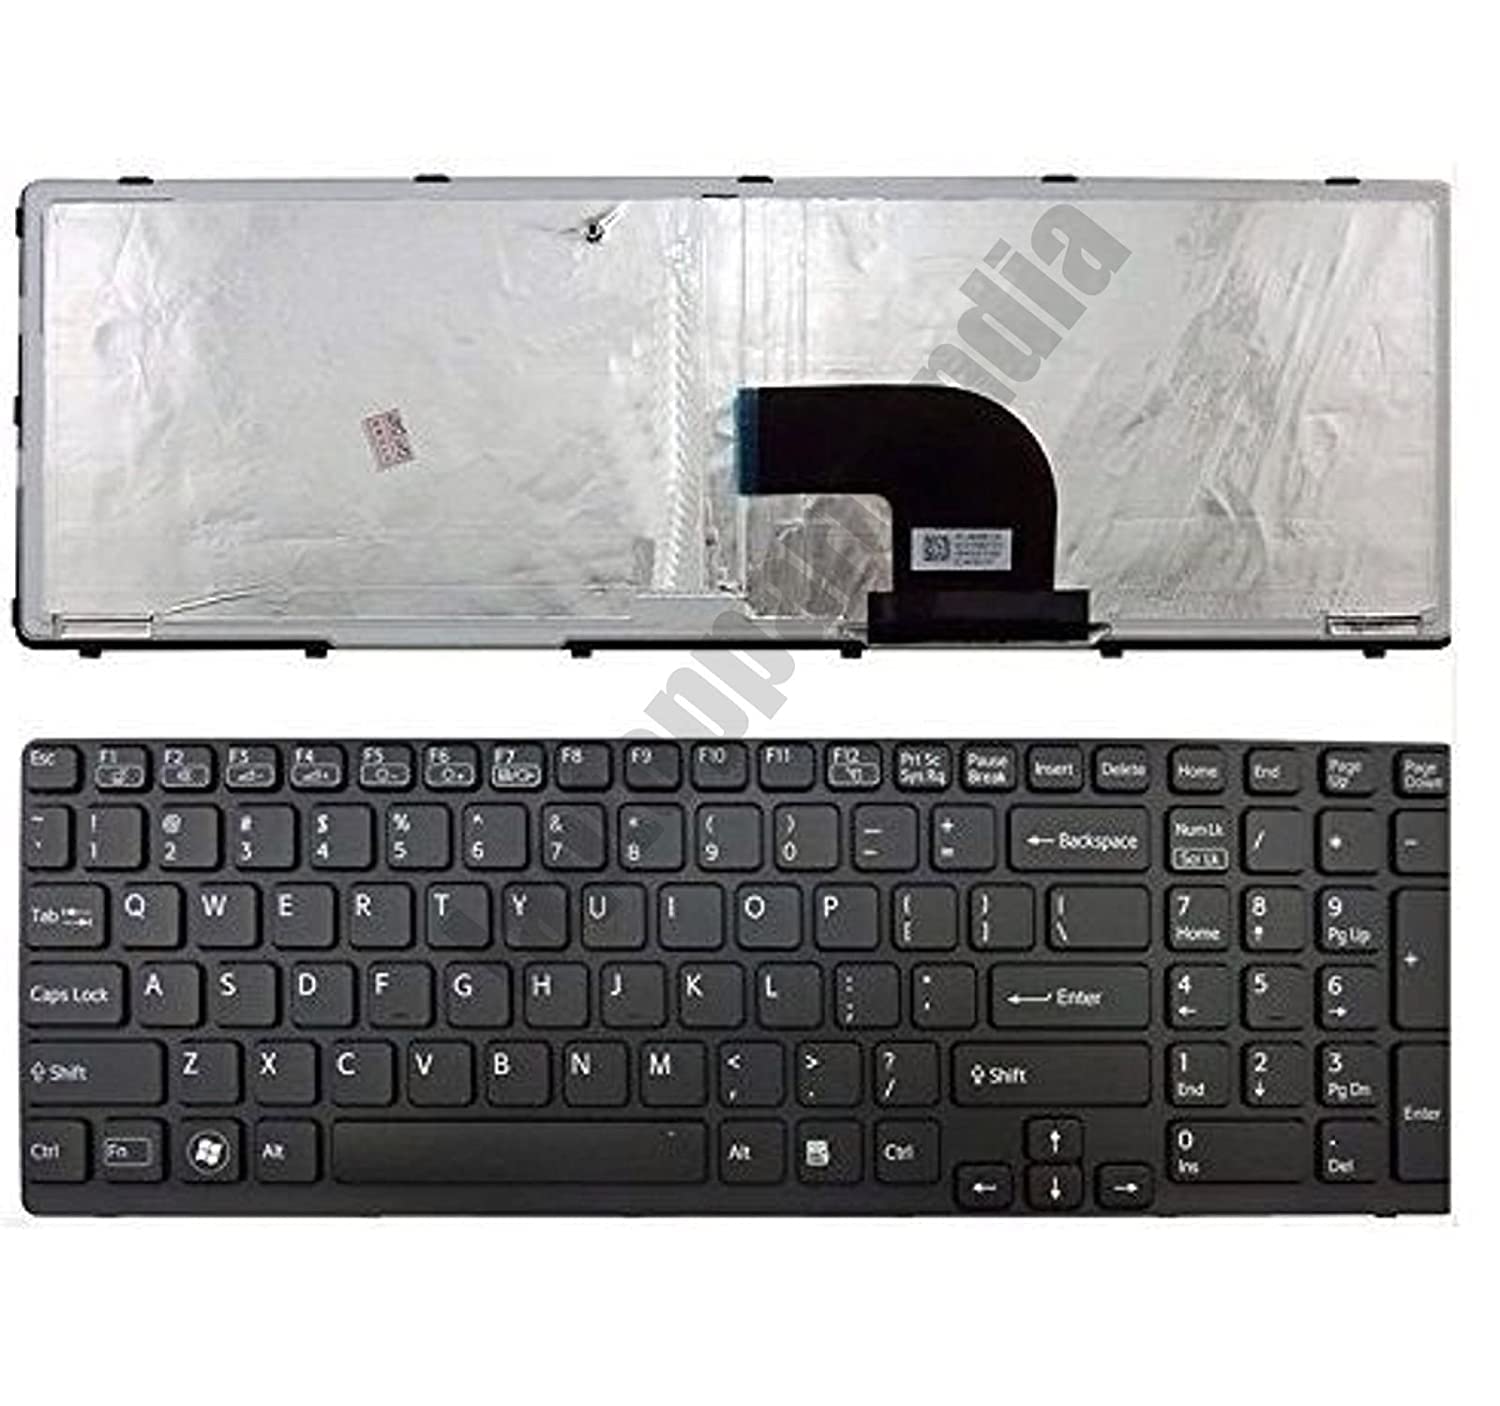 WISTAR Laptop Keyboard Compatible for Sony VAIO SVE15 SV-E15 SV-E15 SVE15 SVE151C11T SVE151D11L SVE151E11T Series (Black)